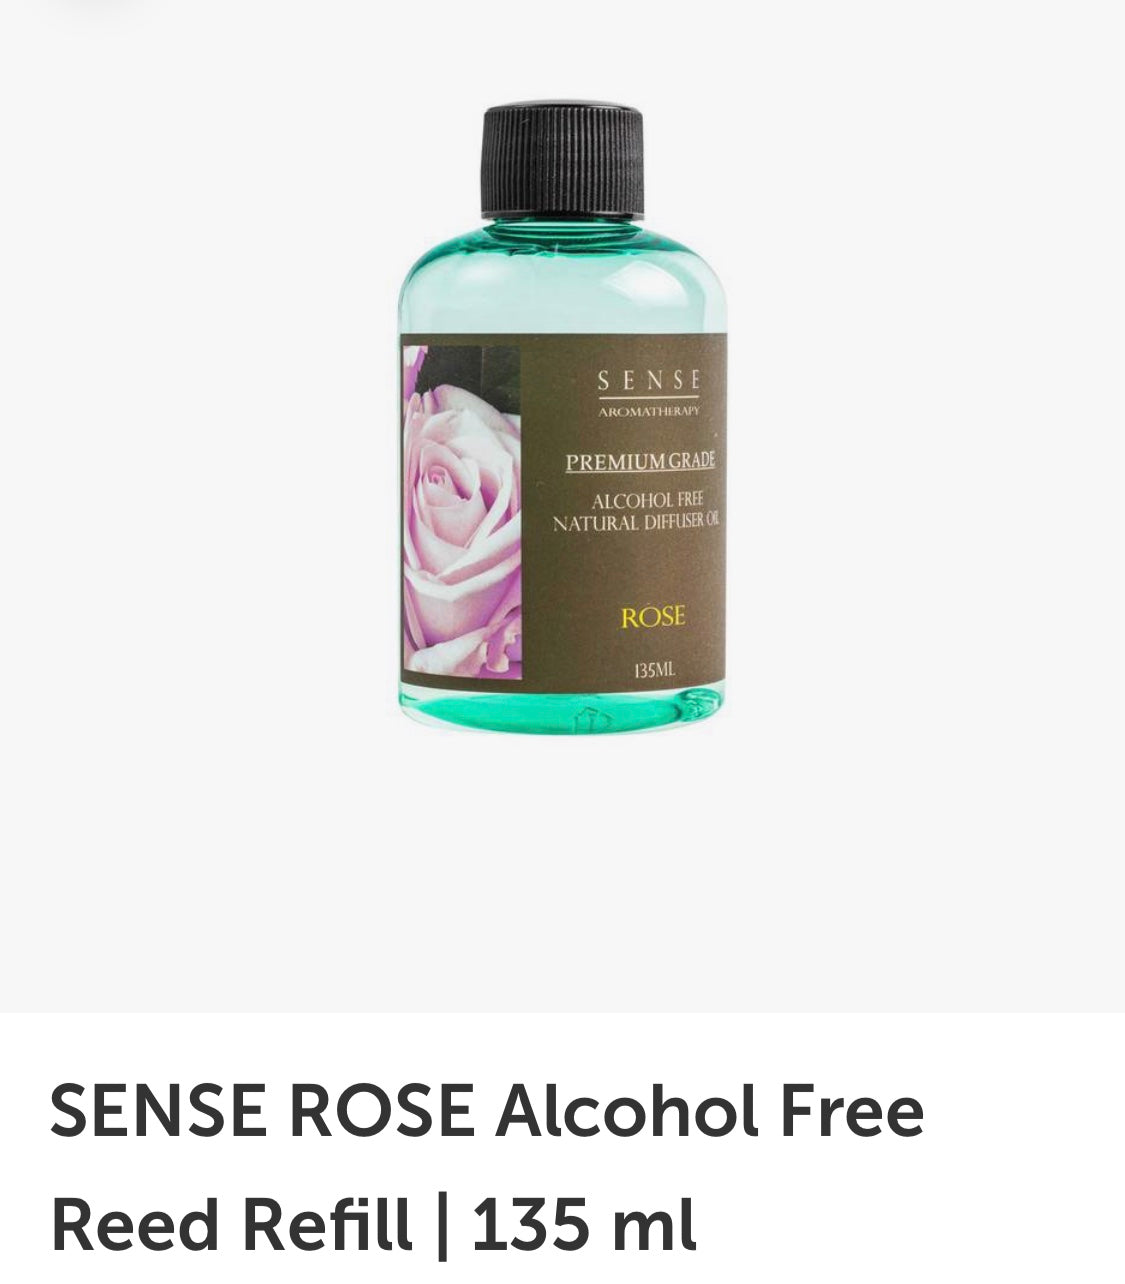 SENSE Alcohol Free Reed Refill - The Sense House 